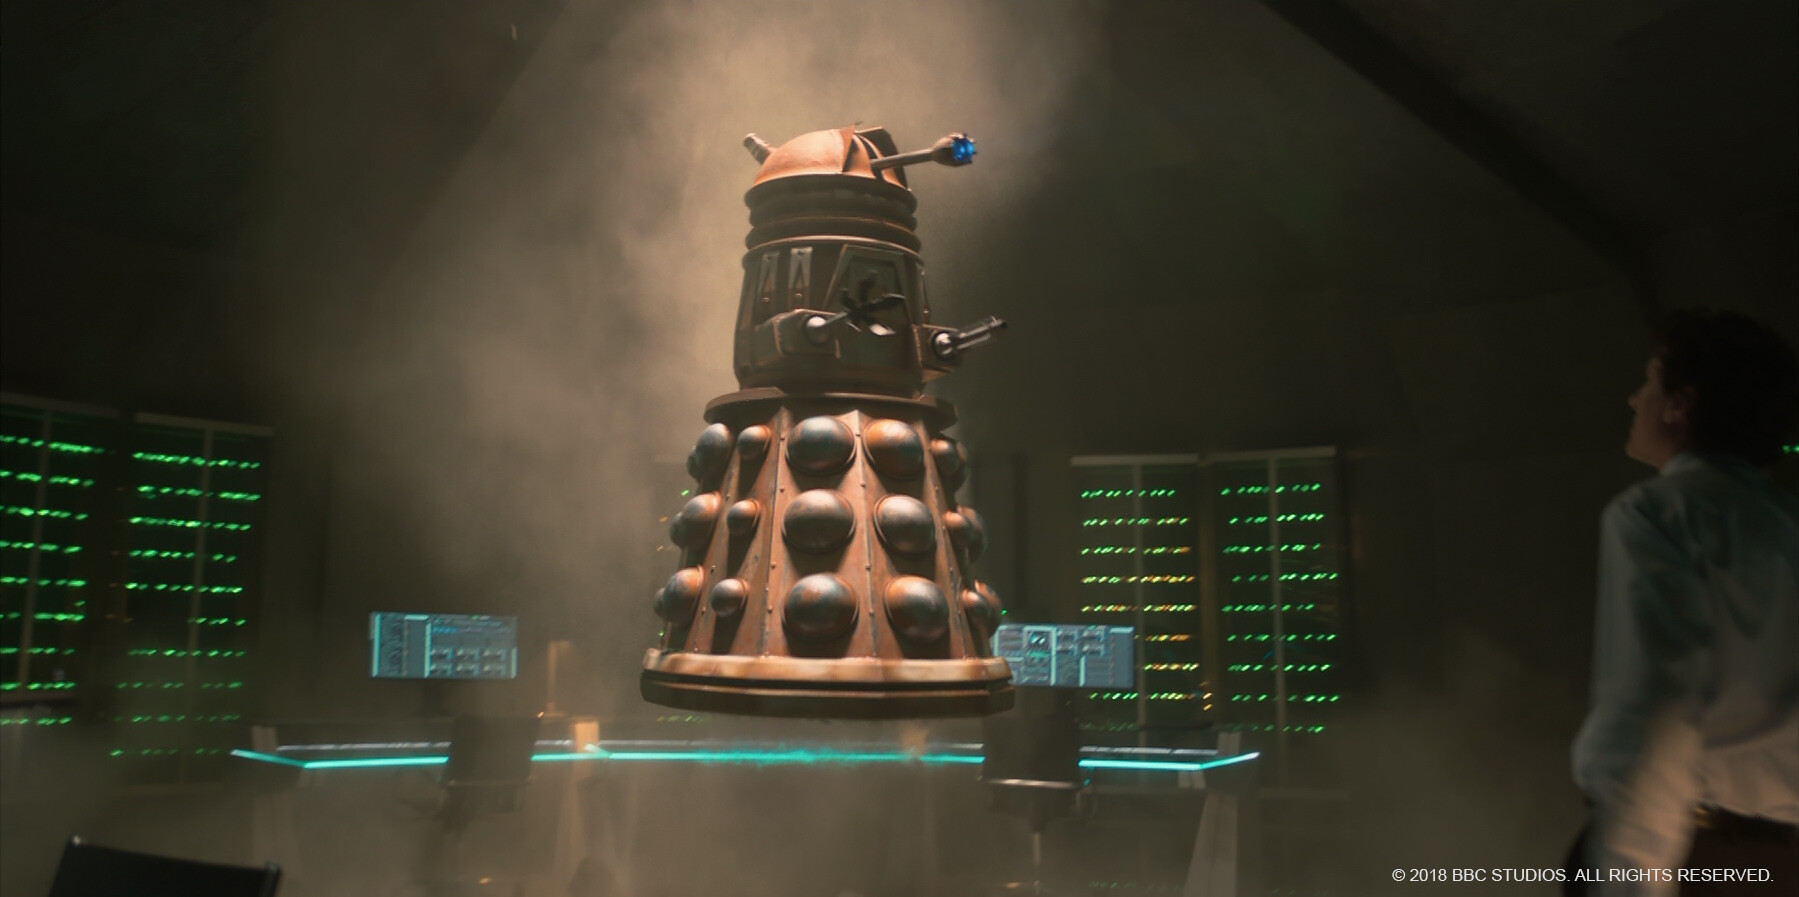 Dalek - texturing, shading and shot lighting.